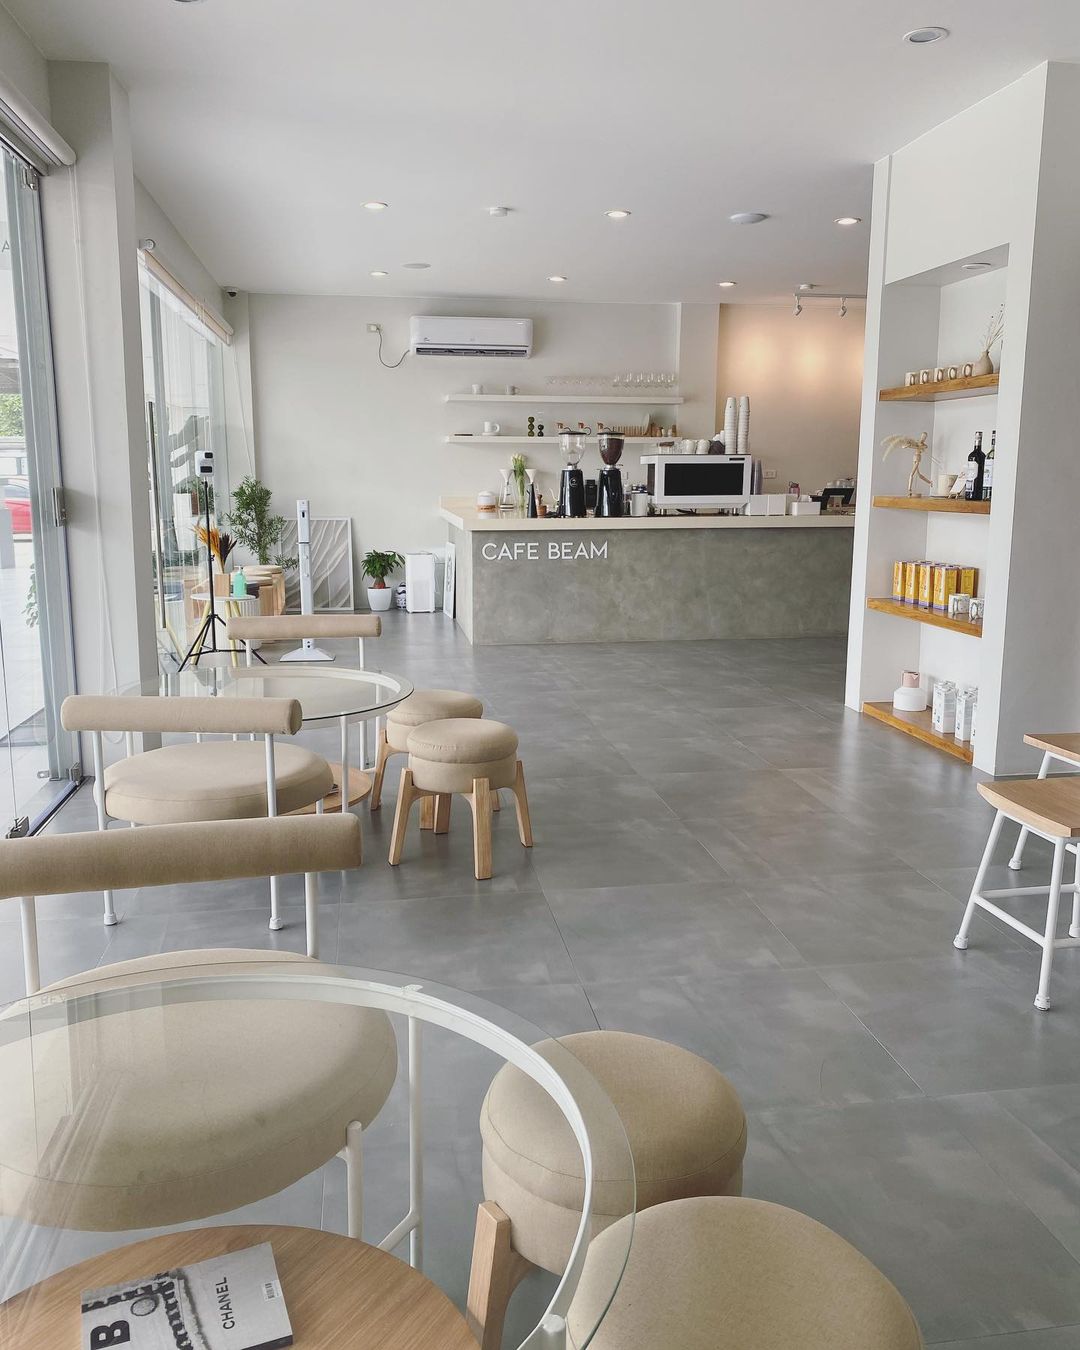 Cafe Beam - minimalist interior